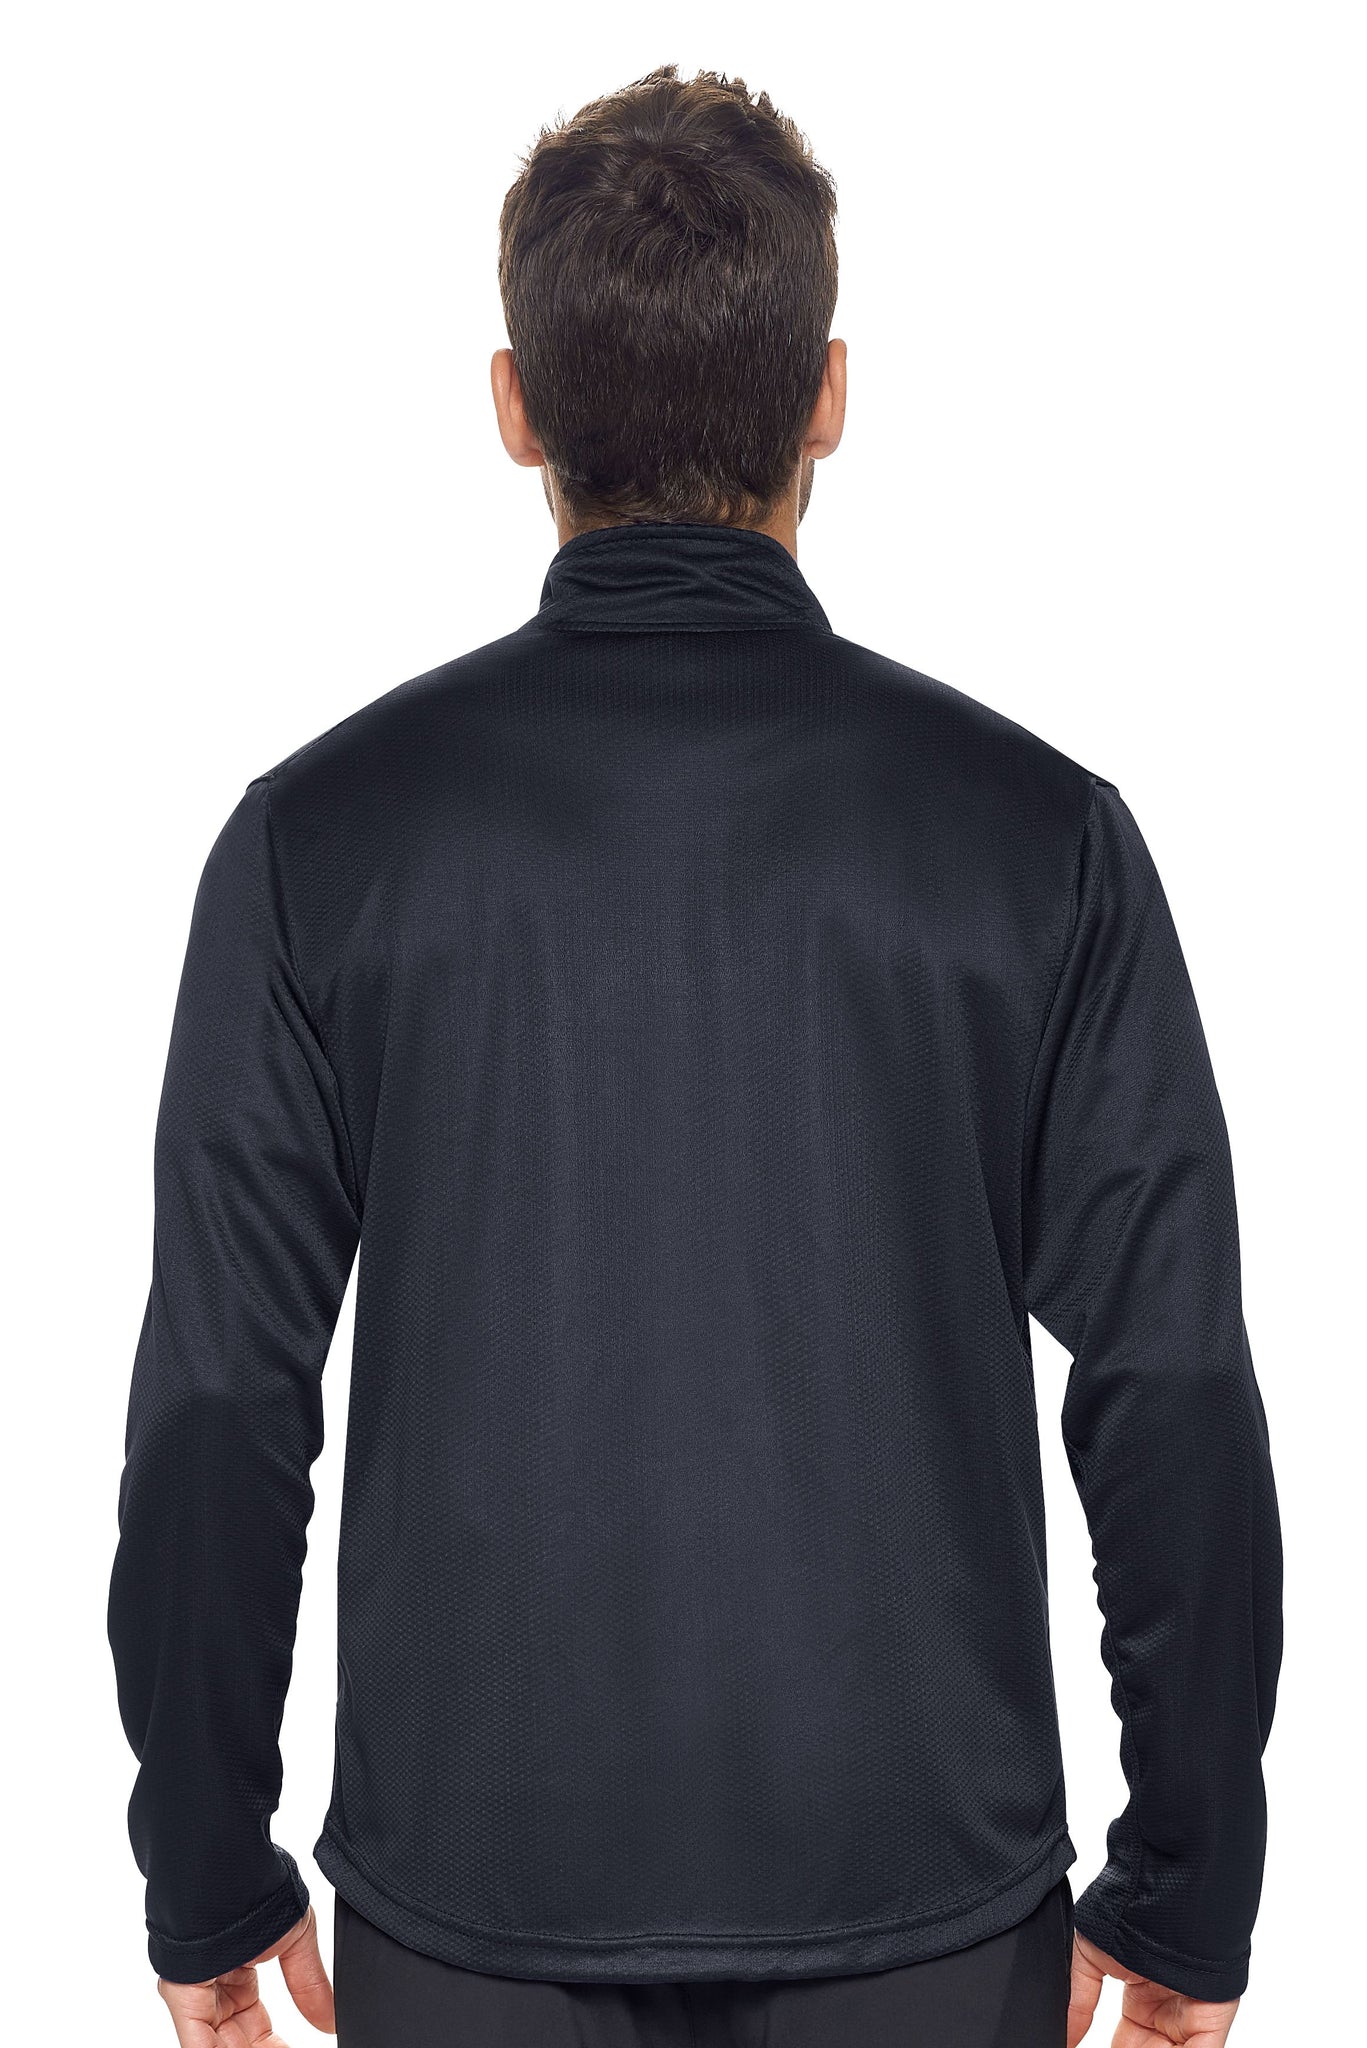 Expert Brand Wholesale Men's Sportsman Jacket in Black Image 3#black